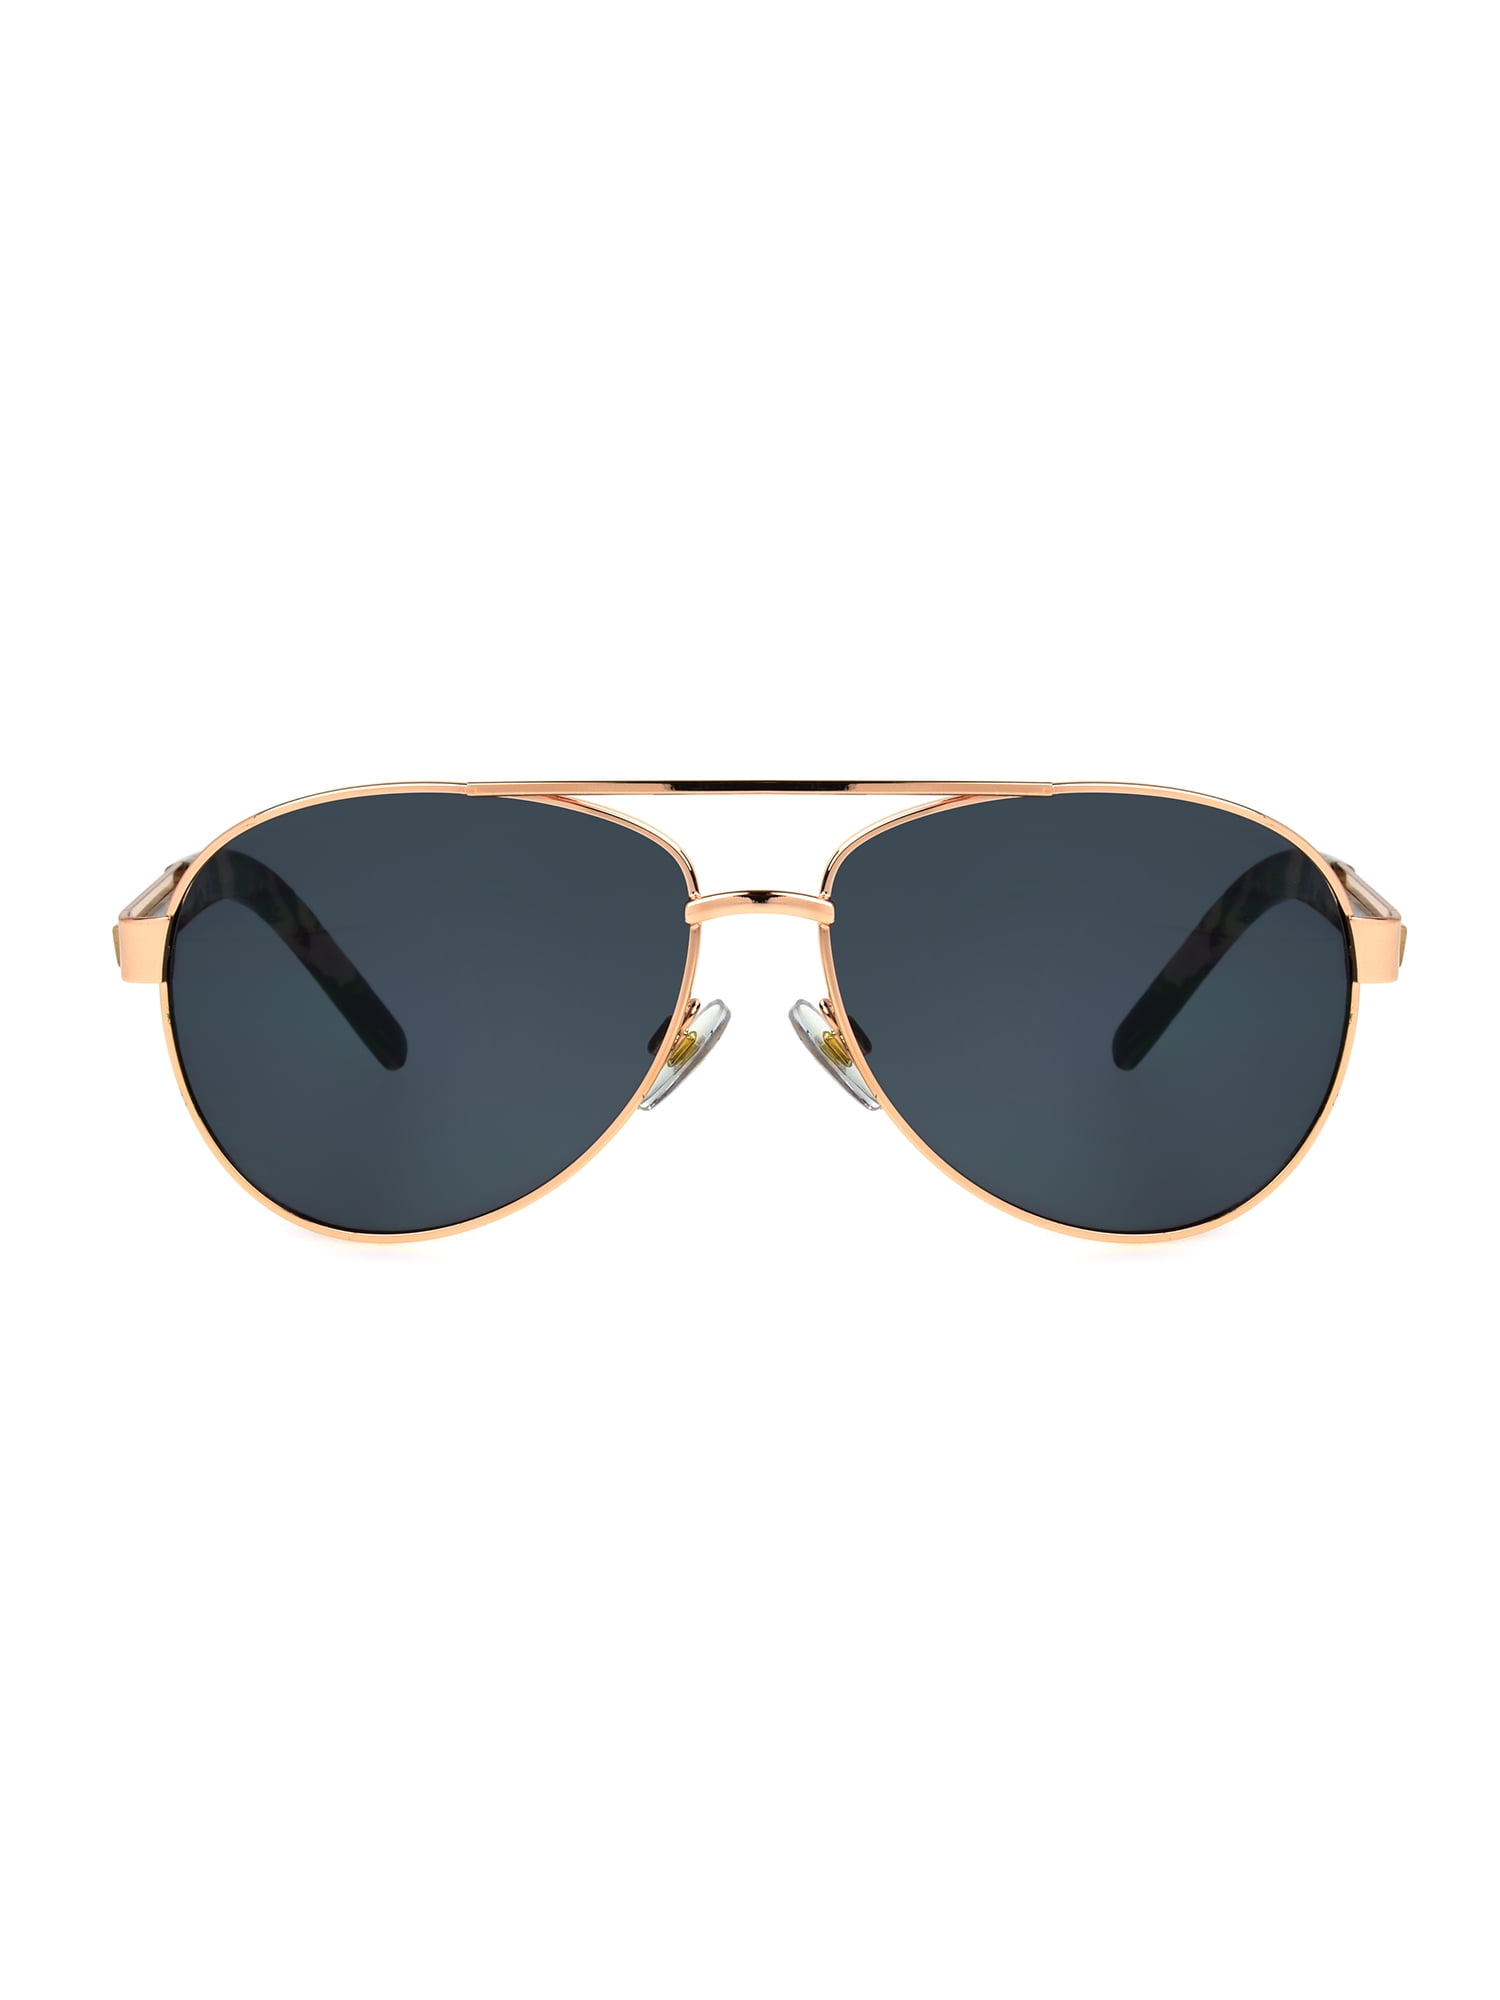 Foster Grant gold relevance Aviator sunglasses New 